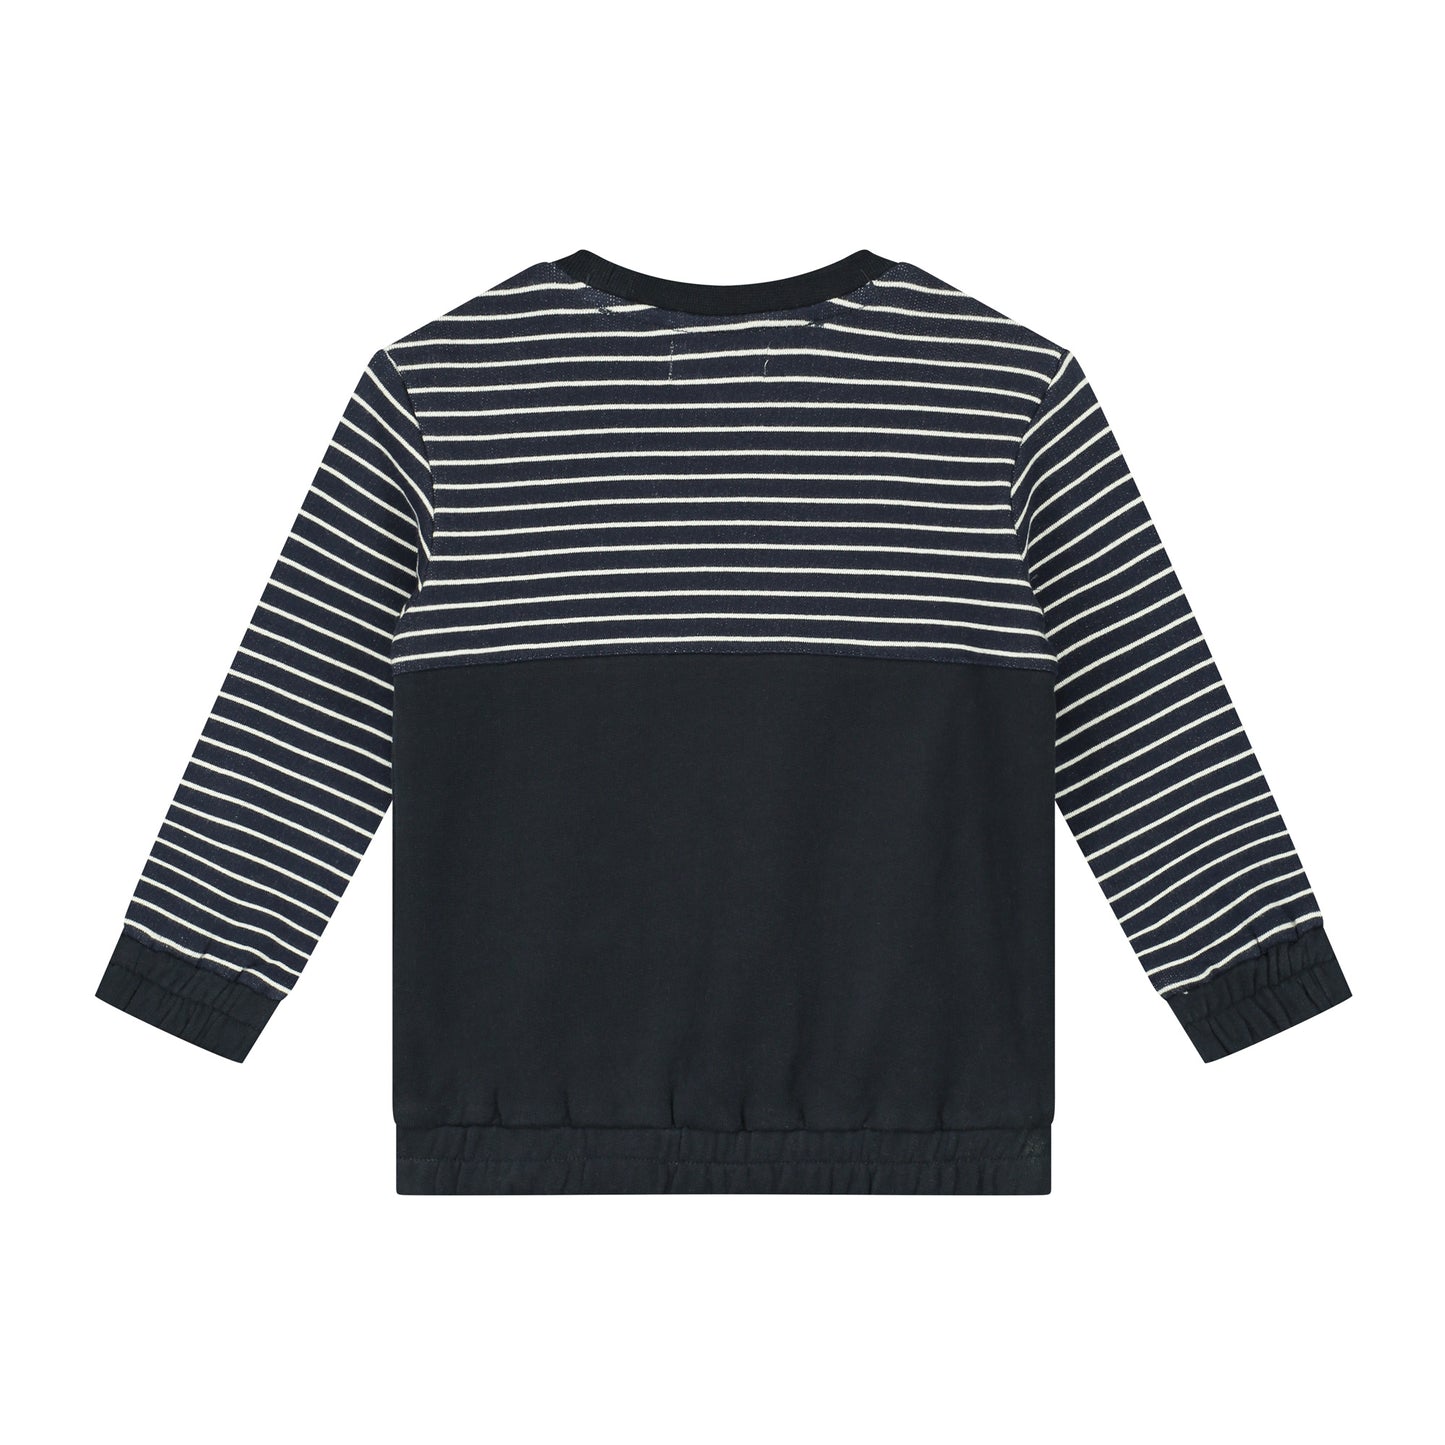 Black and white color block sweatshirt